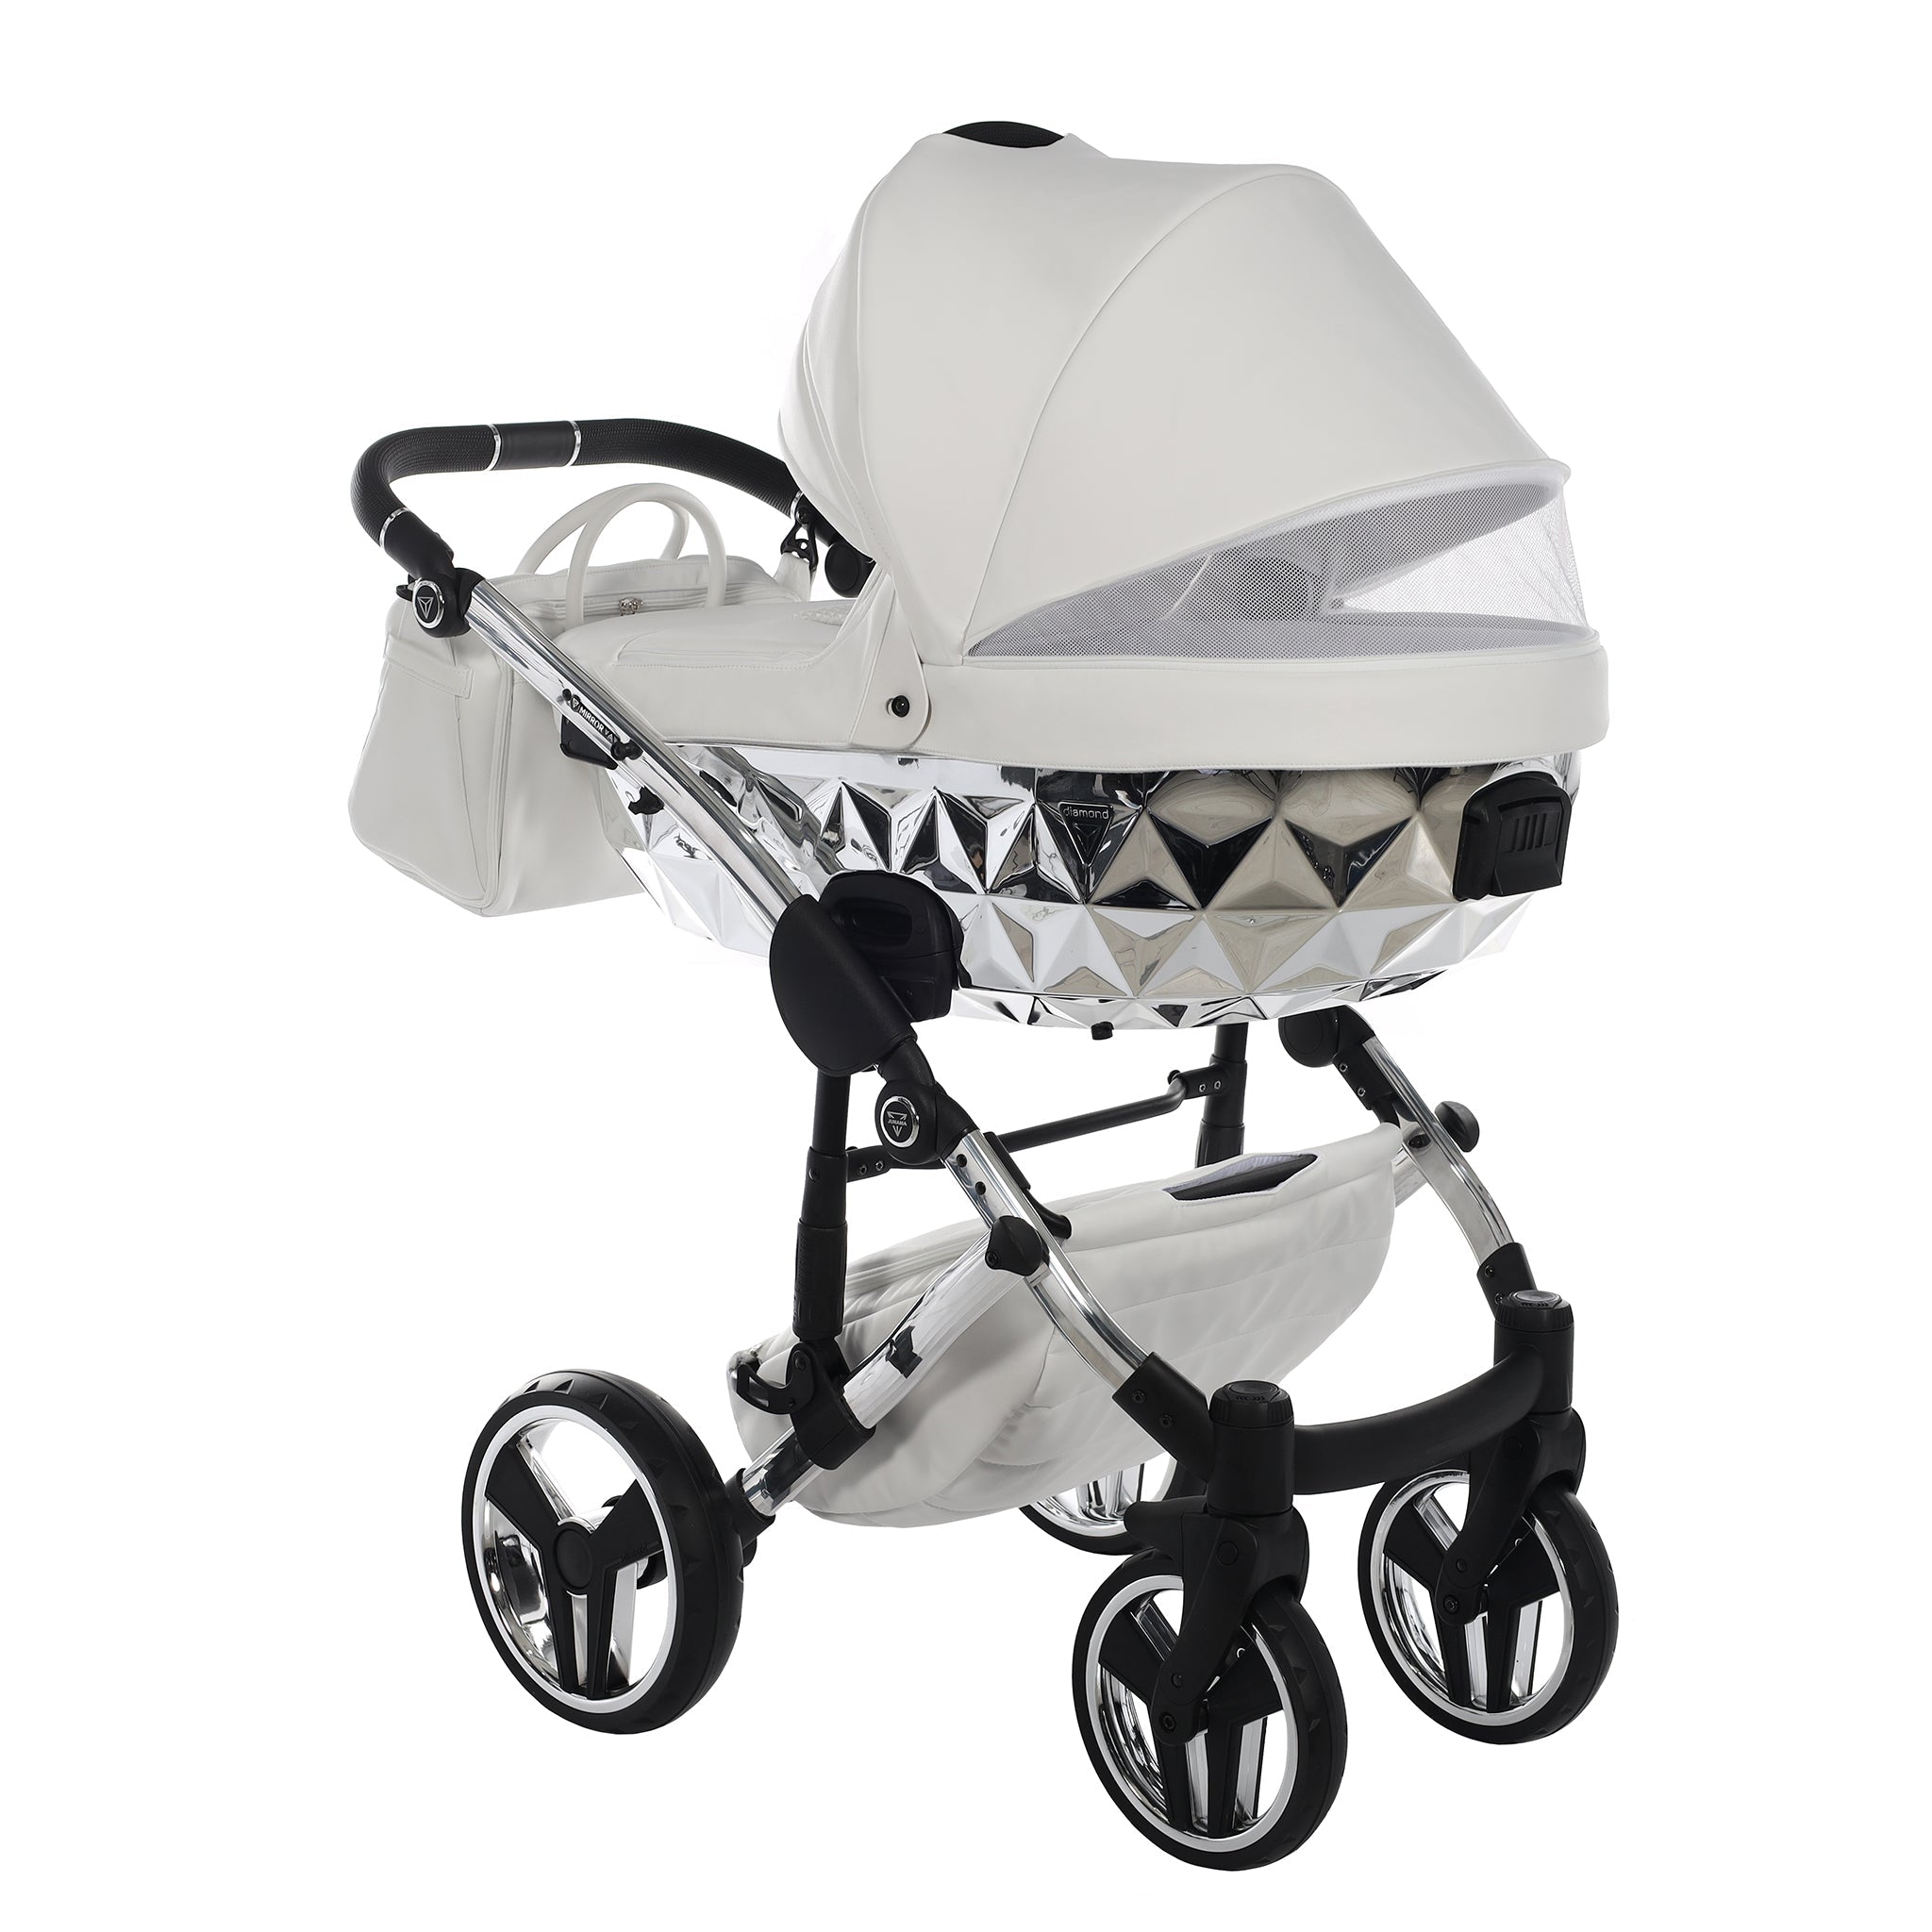 Junama Mirror, baby prams or stroller 2 in 1 - Silver chrome and Silver, Code number: JUNMIR04